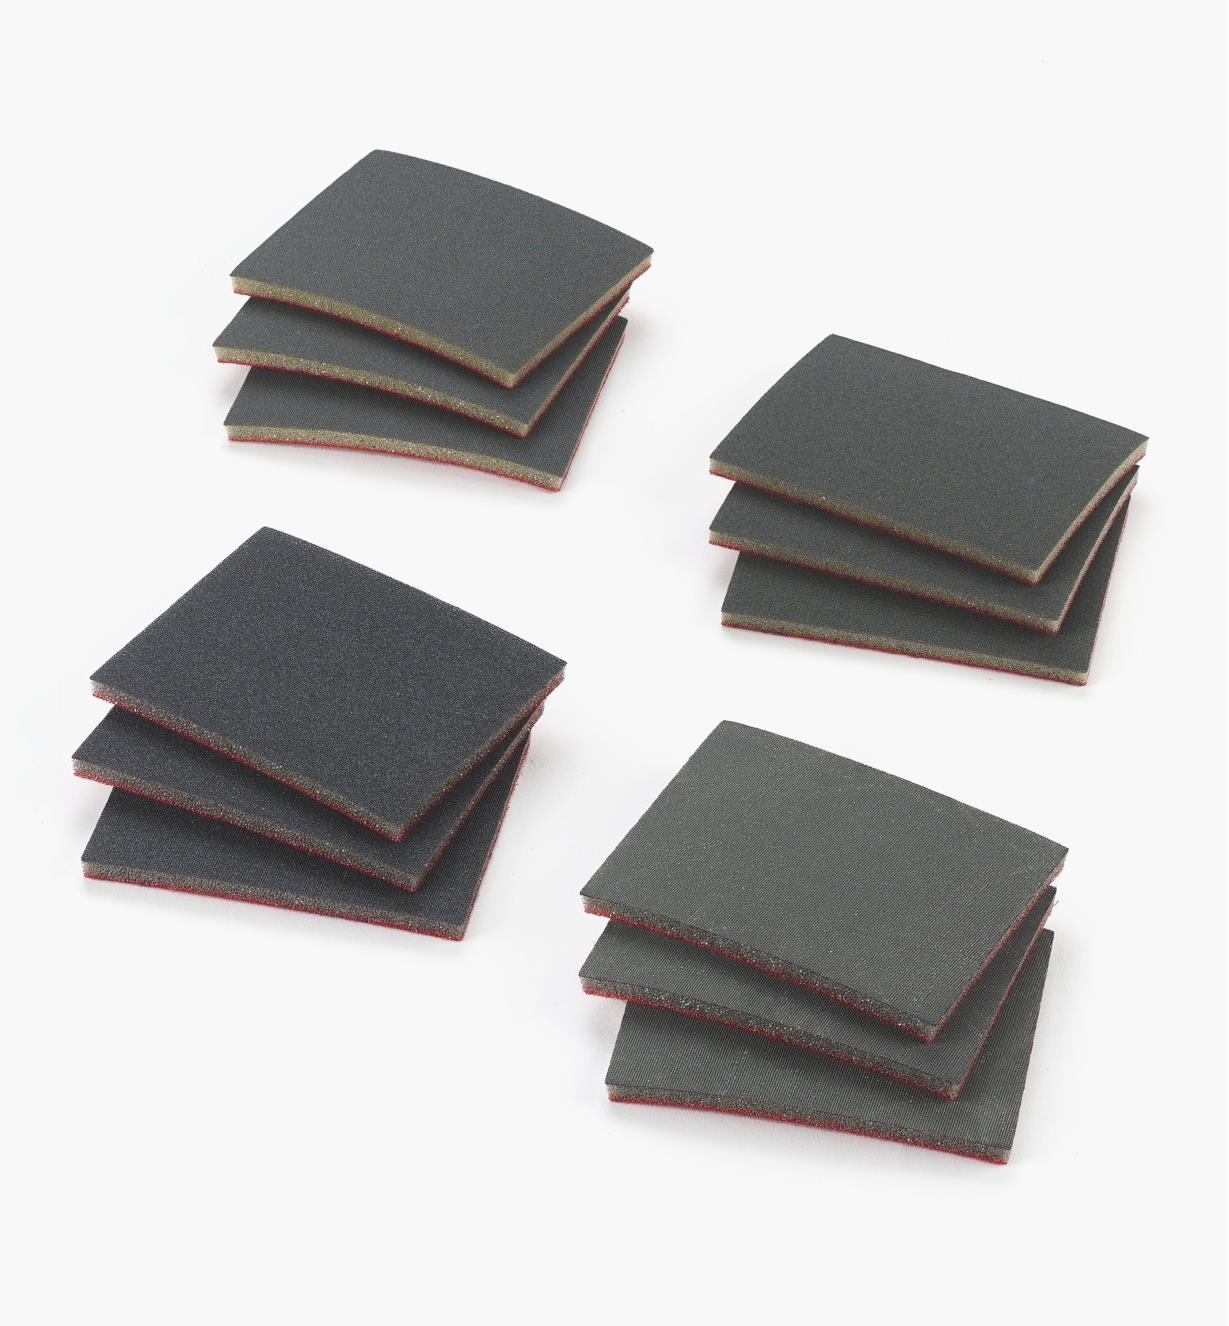 08K3710 - 12-Pc. Sample Pack of Mirka Abralon 3" × 4" Foam Grip Sheets